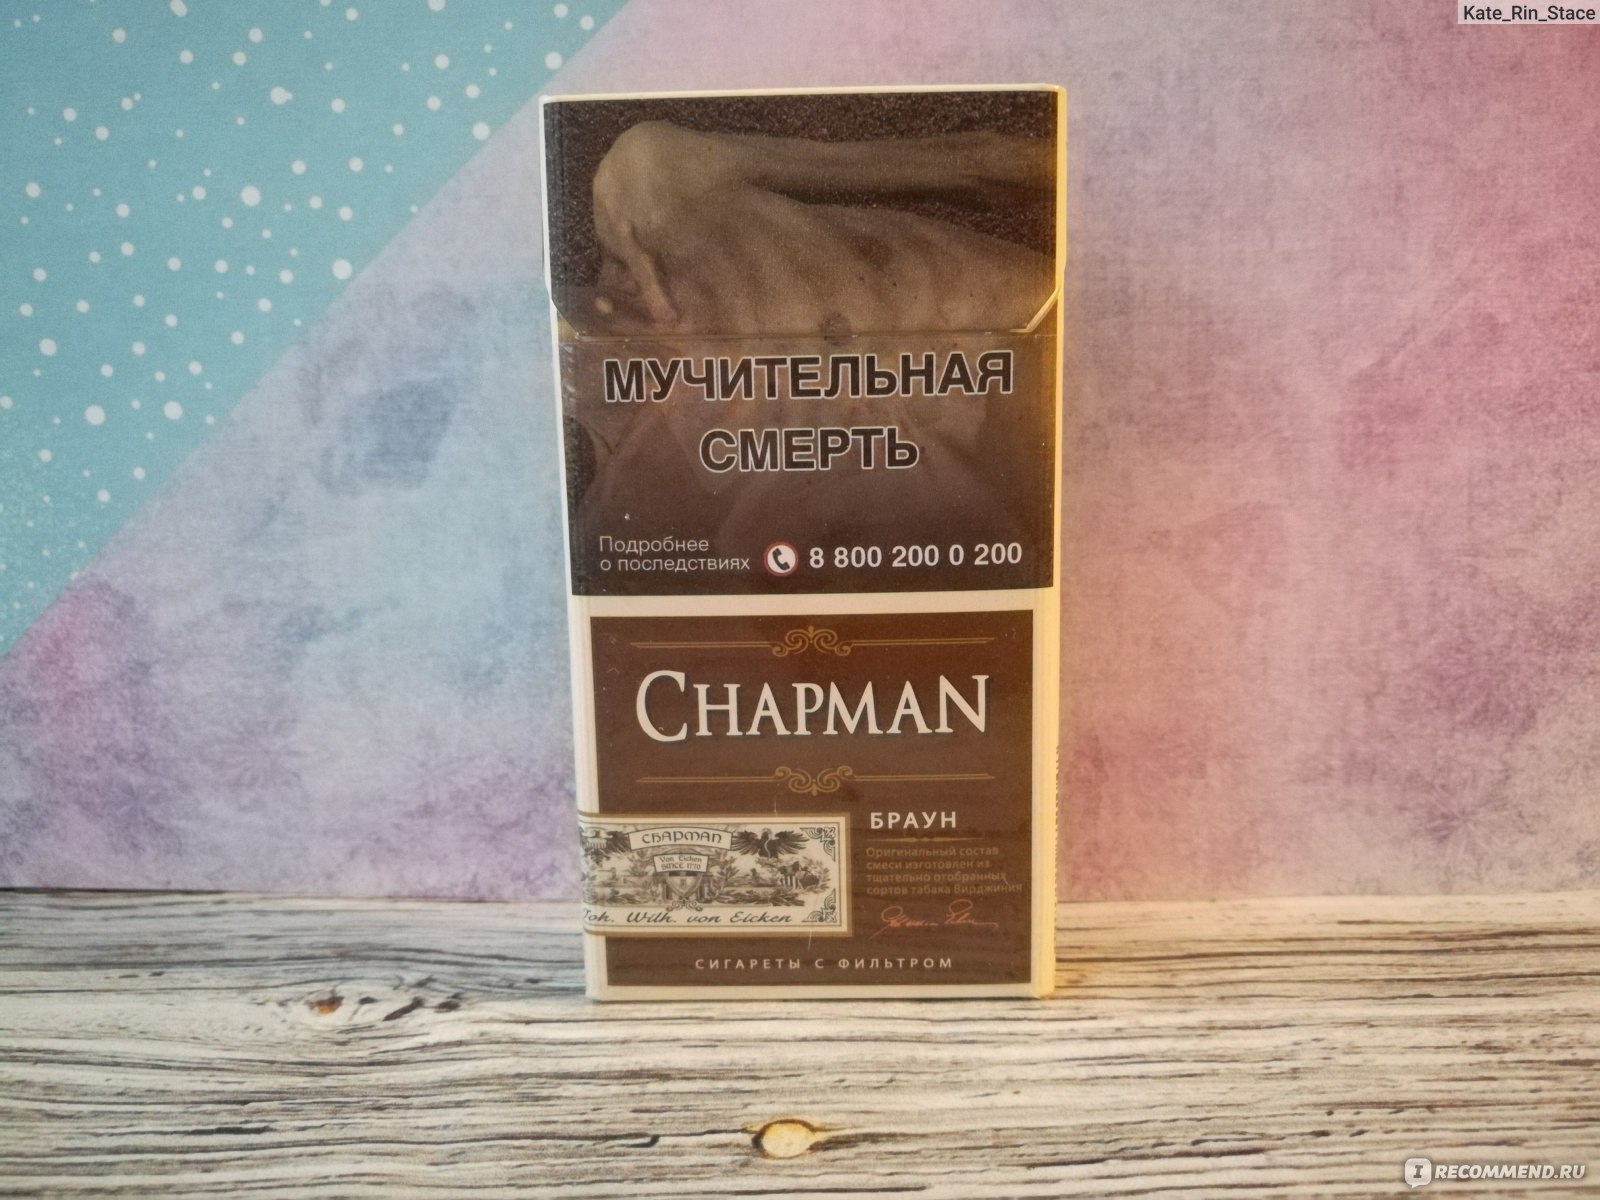 Chapman сигареты вкусы Браун